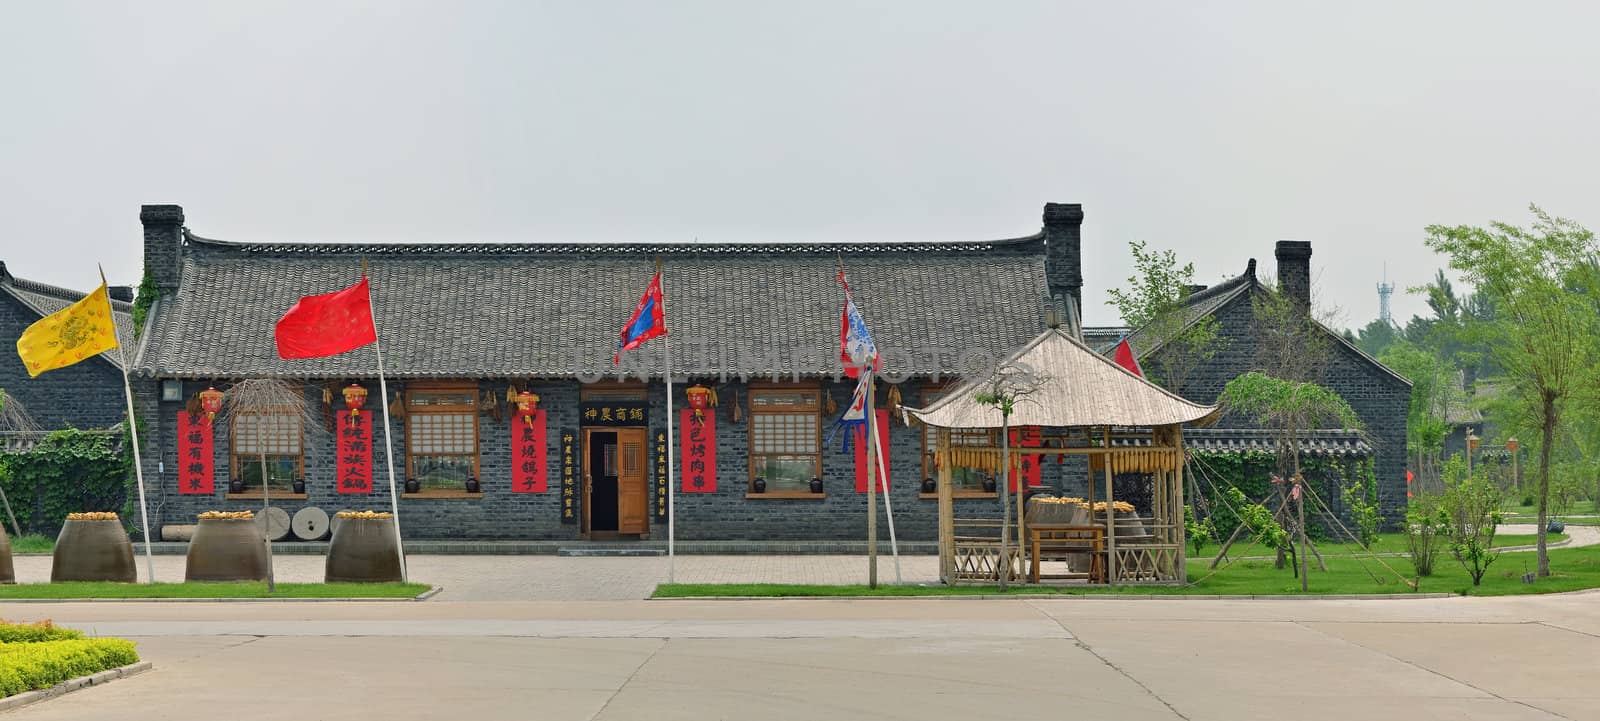 Chinese restaurant in north China. Jilin province near Changchun, rural area.